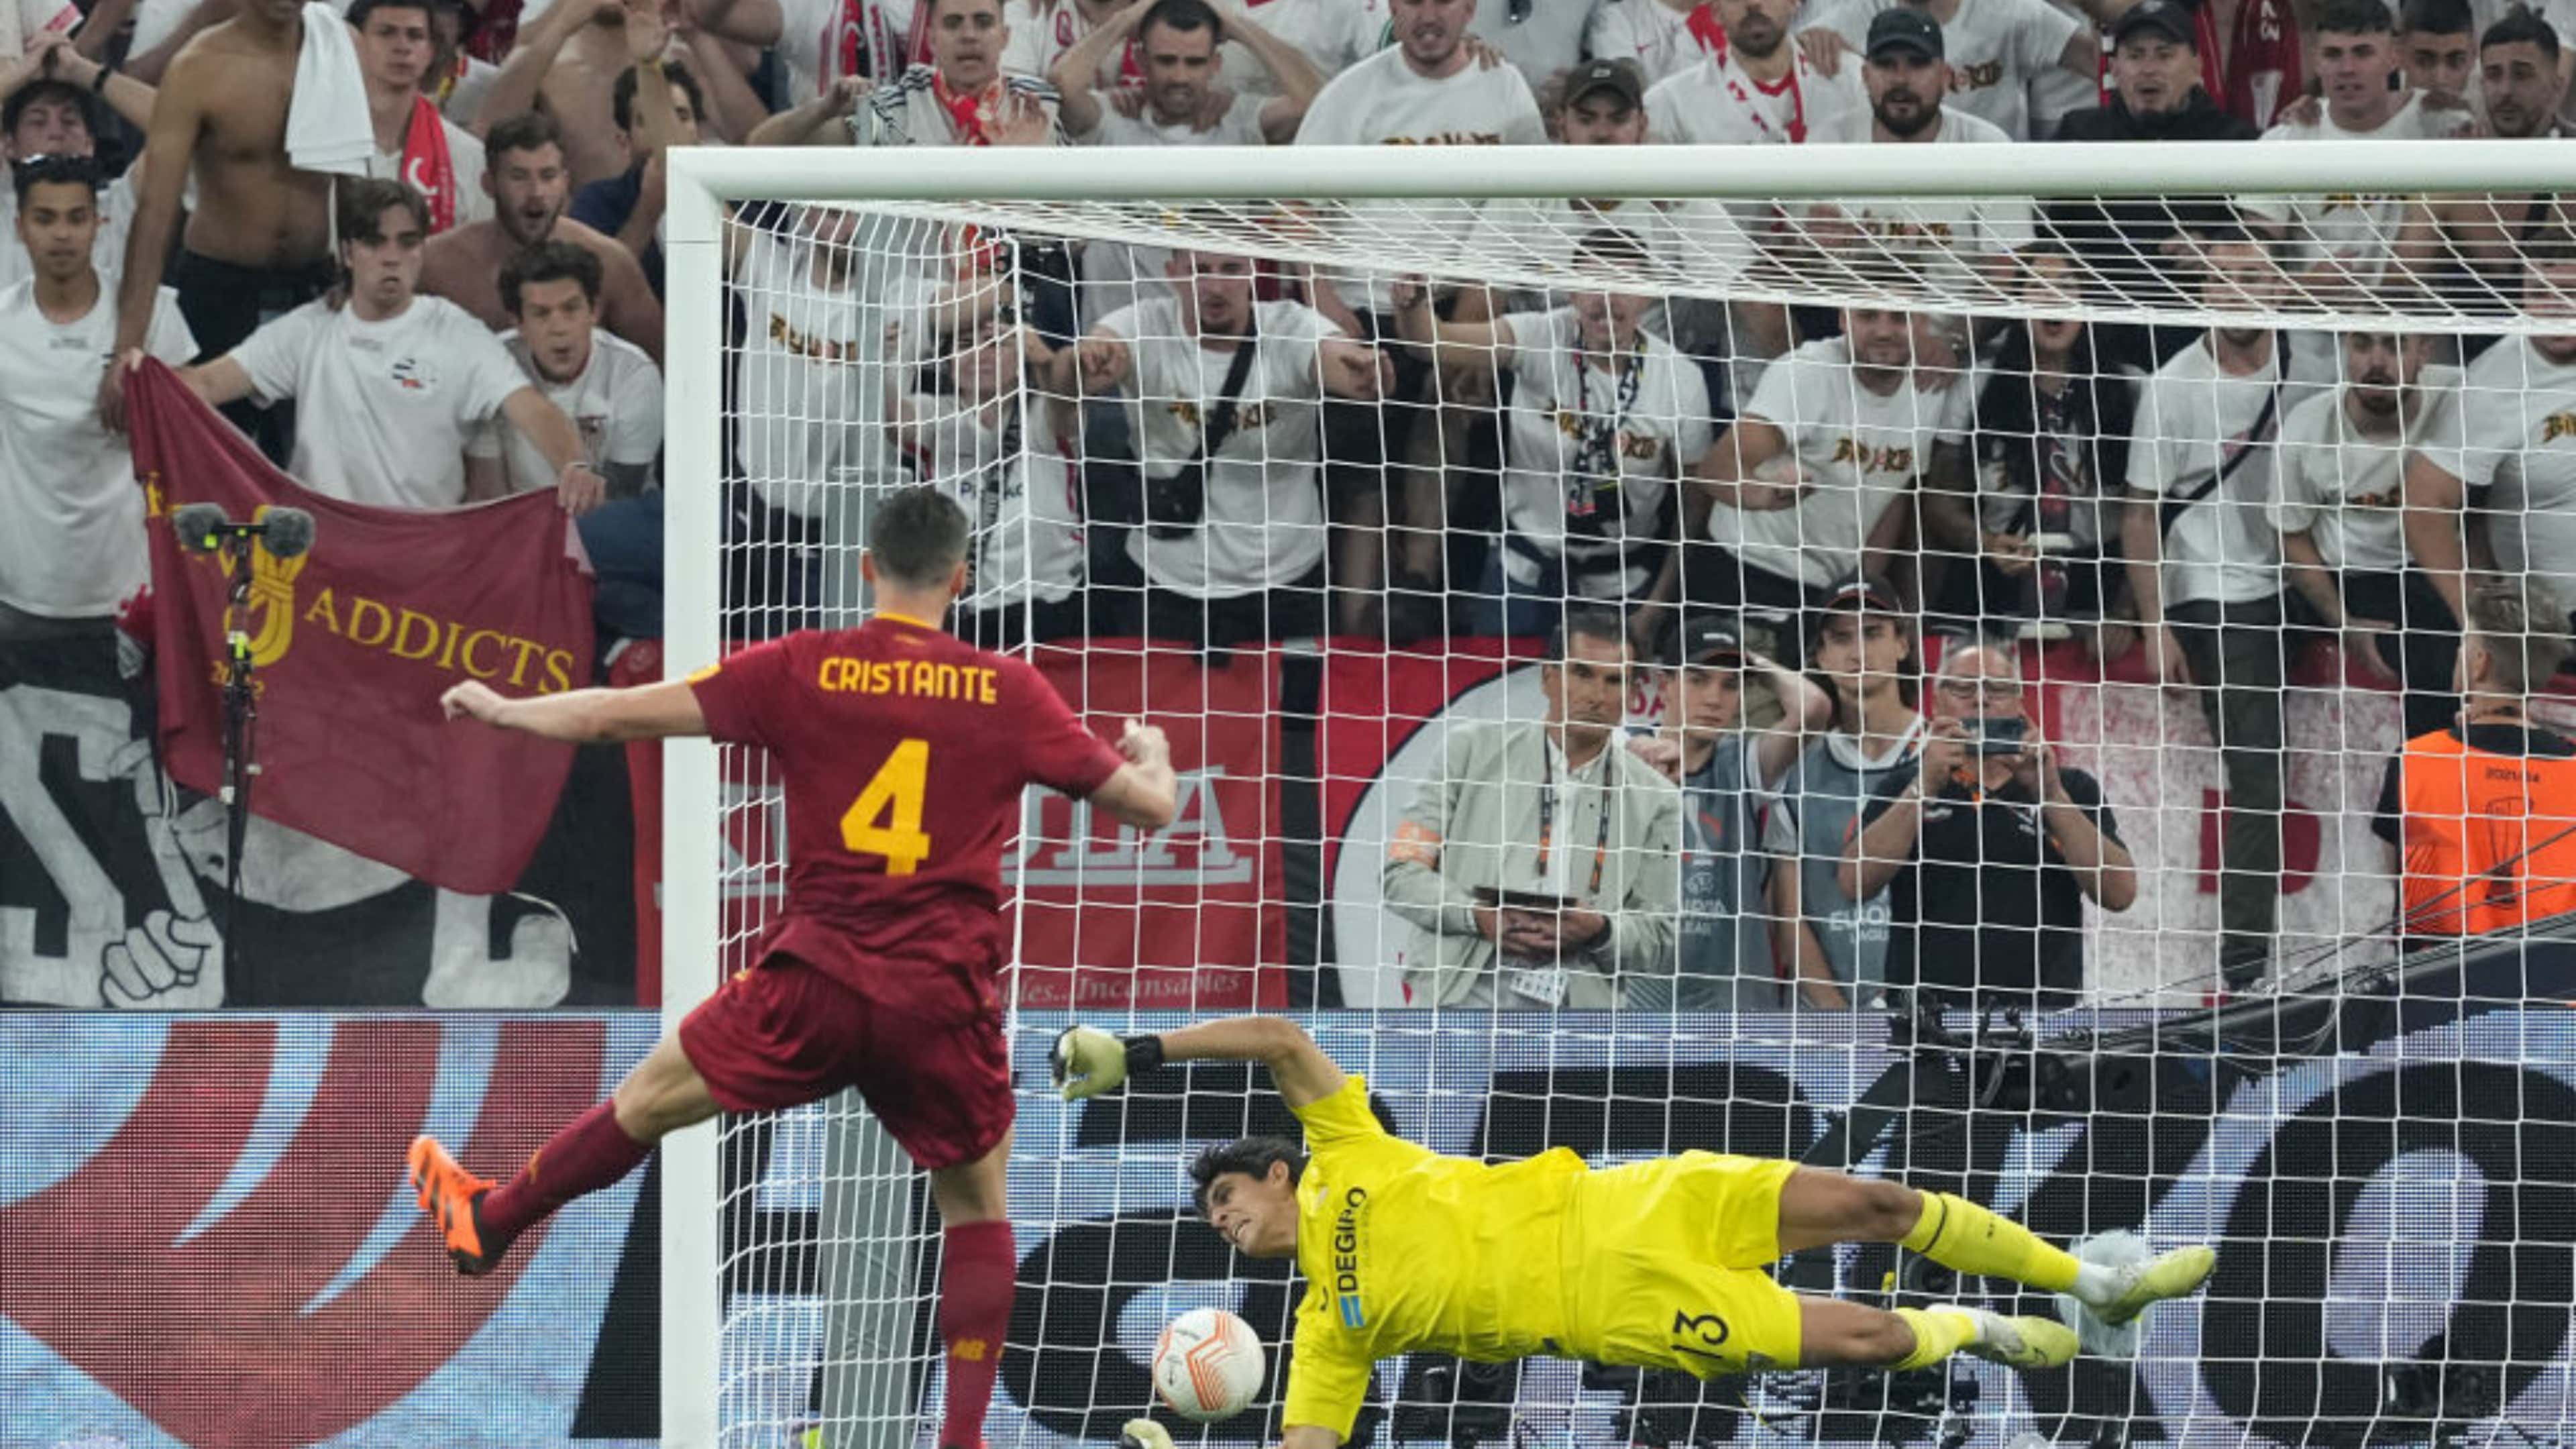 Penalti fallado Cristante. Sevilla vs. Roma final Europa League 22-23